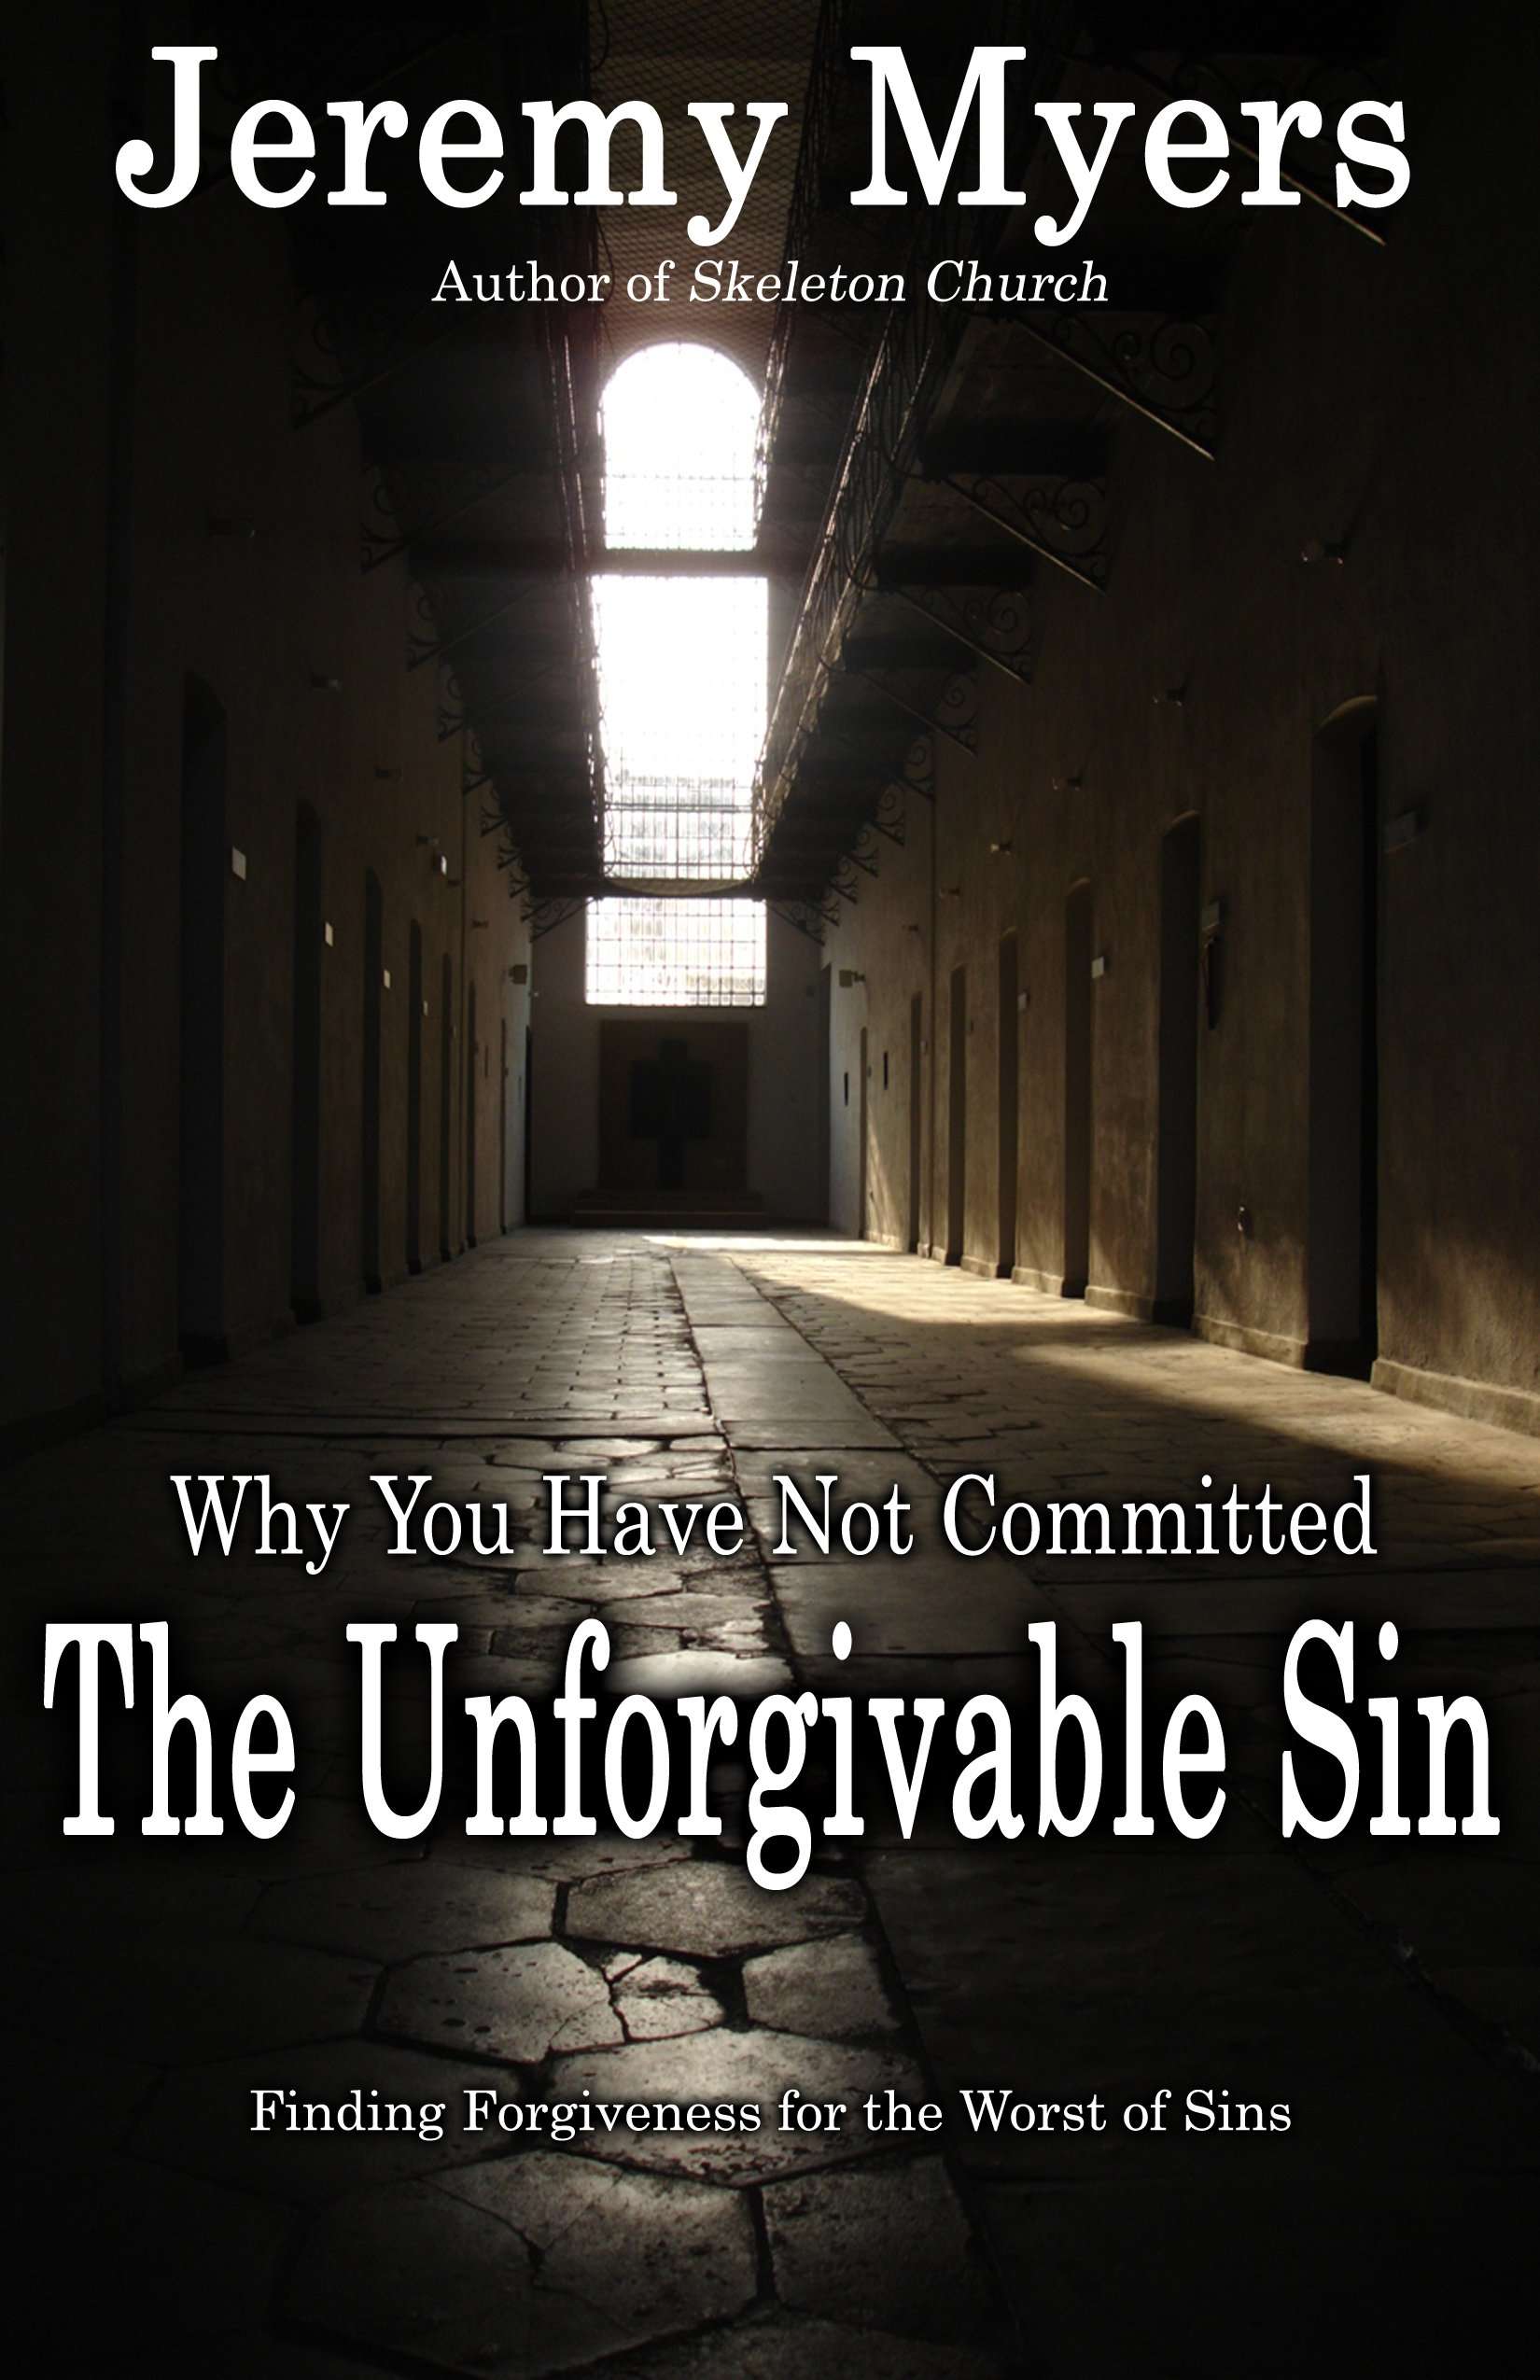 Free Copies of Unforgivable Sin